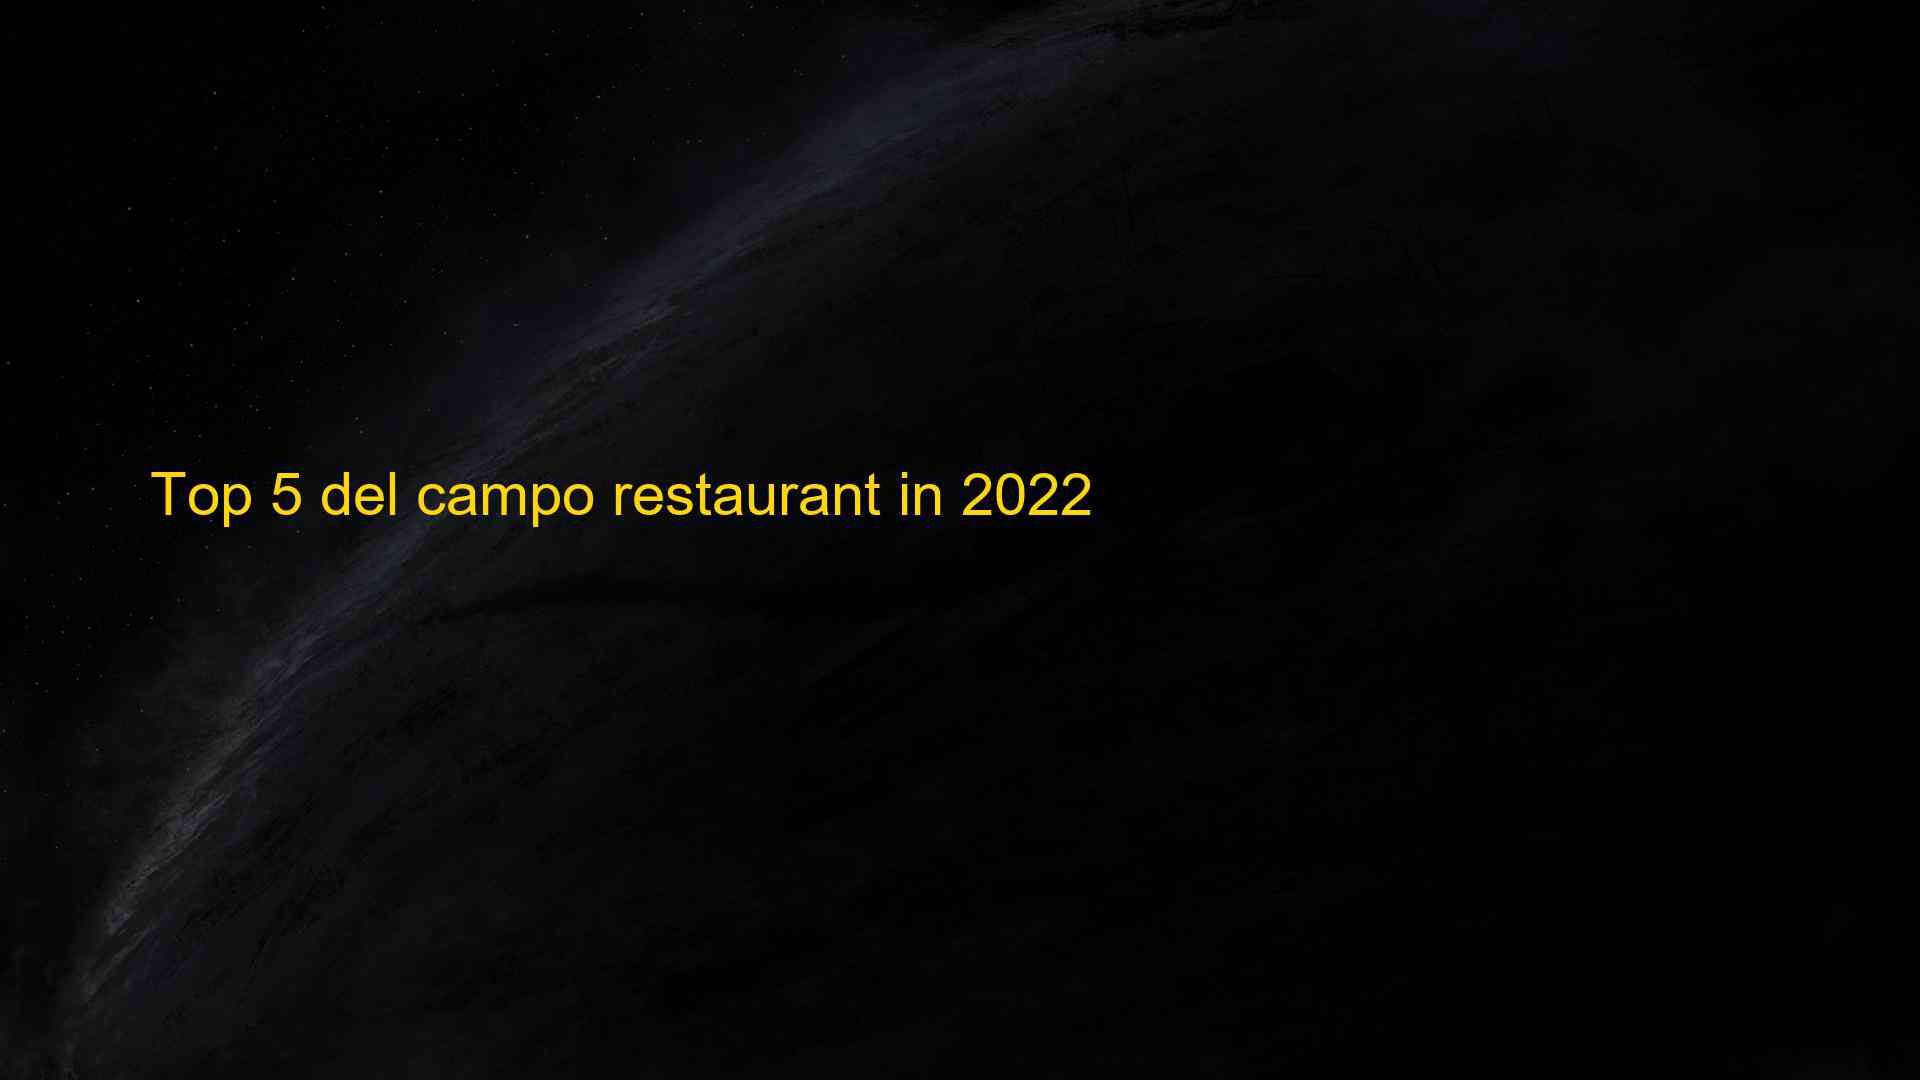 Top 5 del campo restaurant in 2022 1663003786